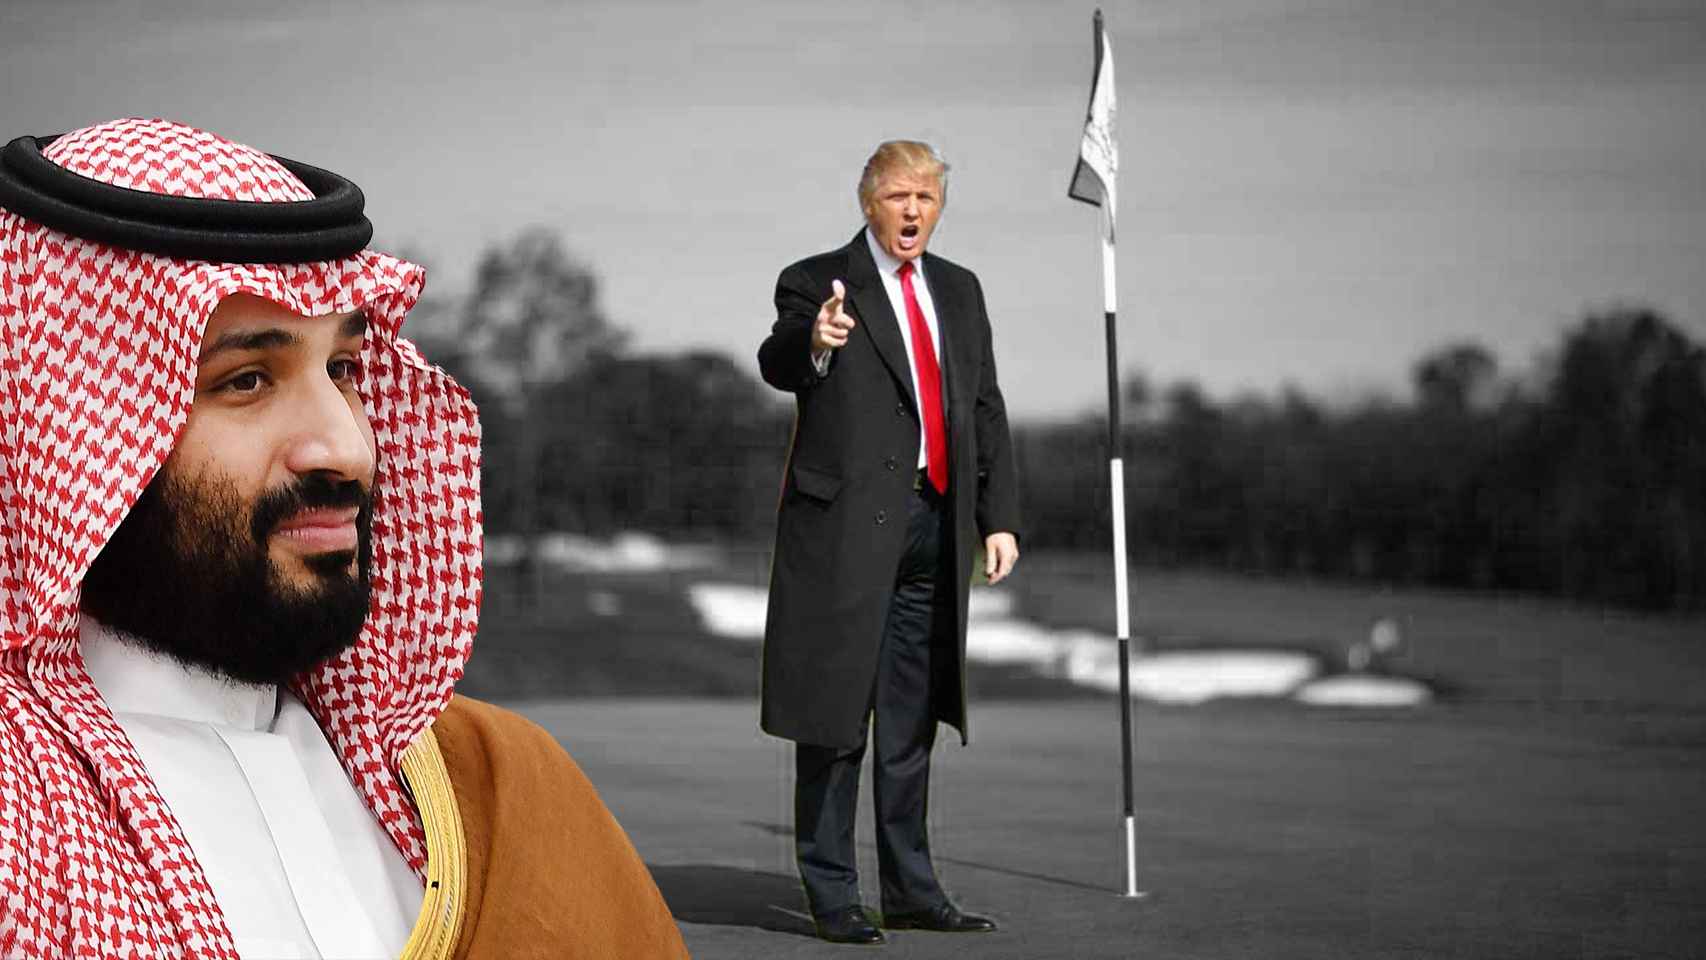 Mohamed bin Salman y Donald Trump, en un fotomontaje